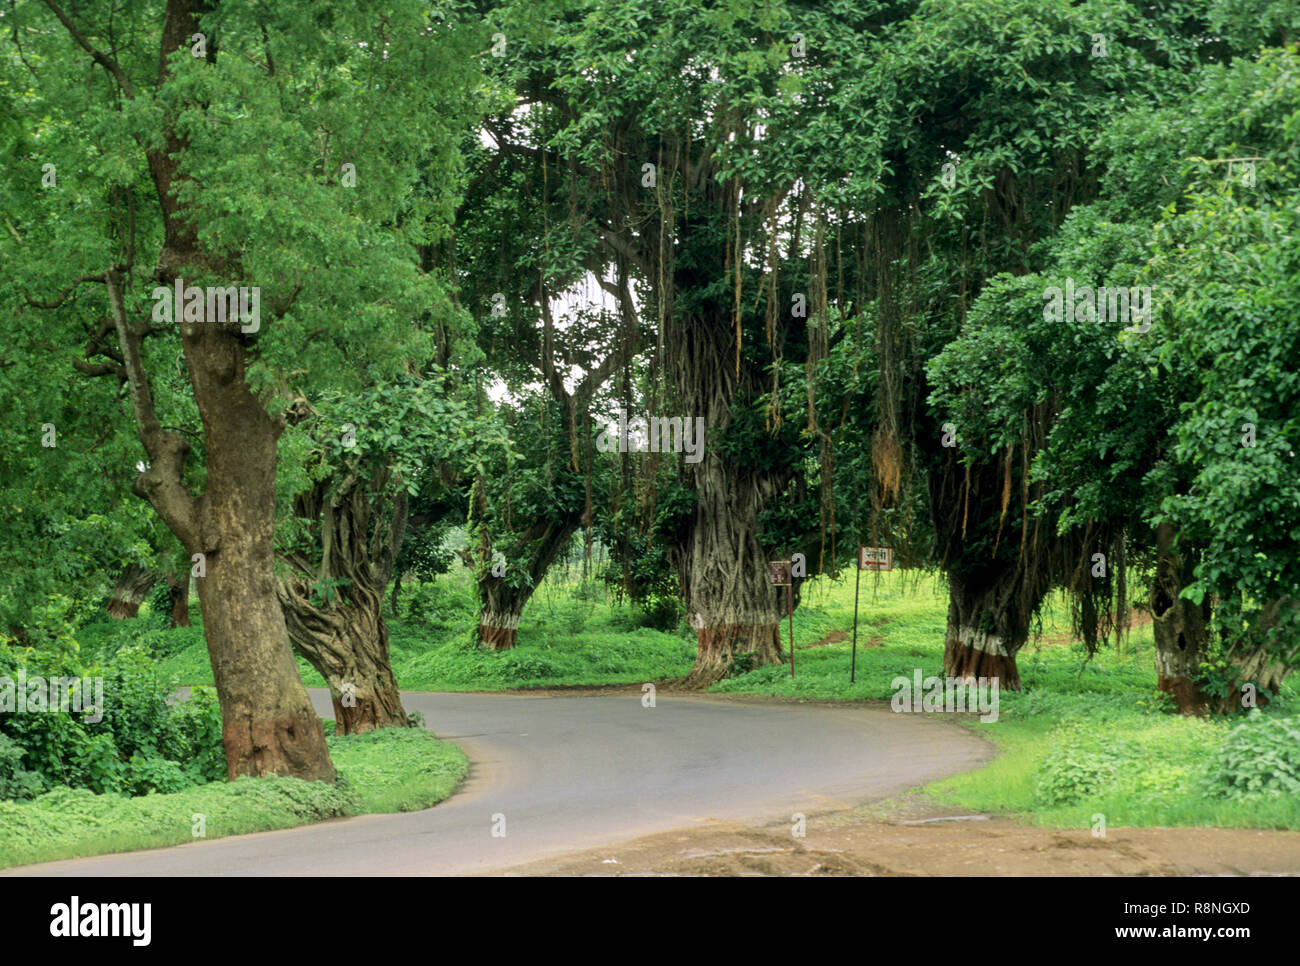 Straße durch dichte Vegetation, malshej, Maharashtra, Indien Stockfoto